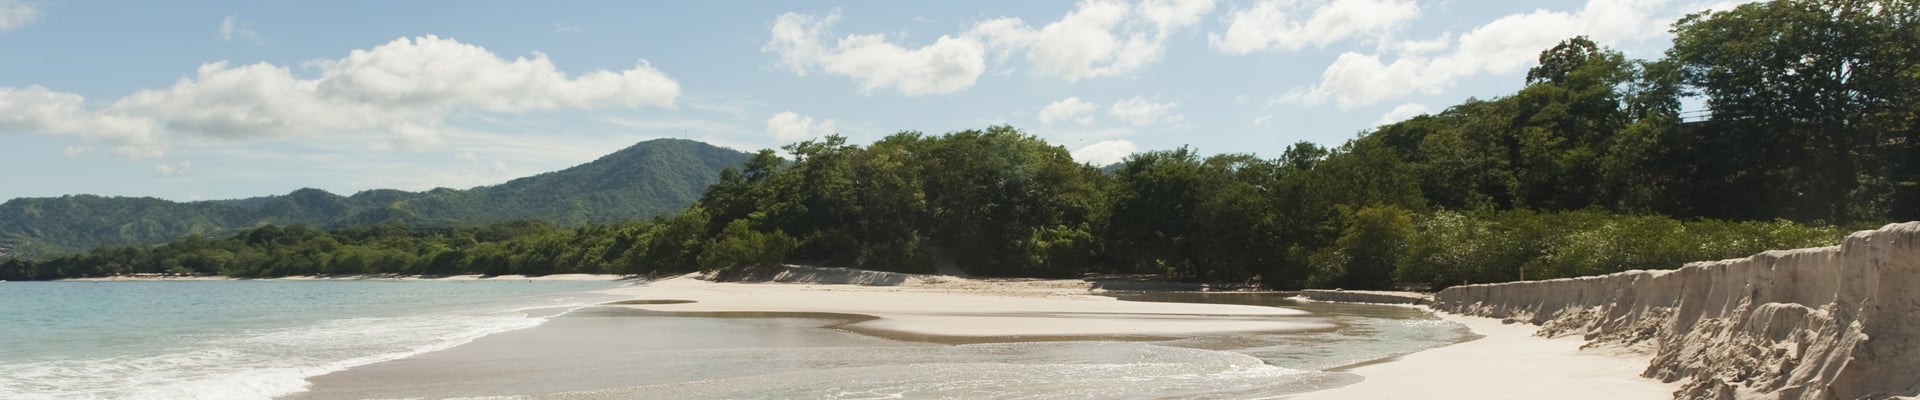 Playa Conchal in Guanacaste